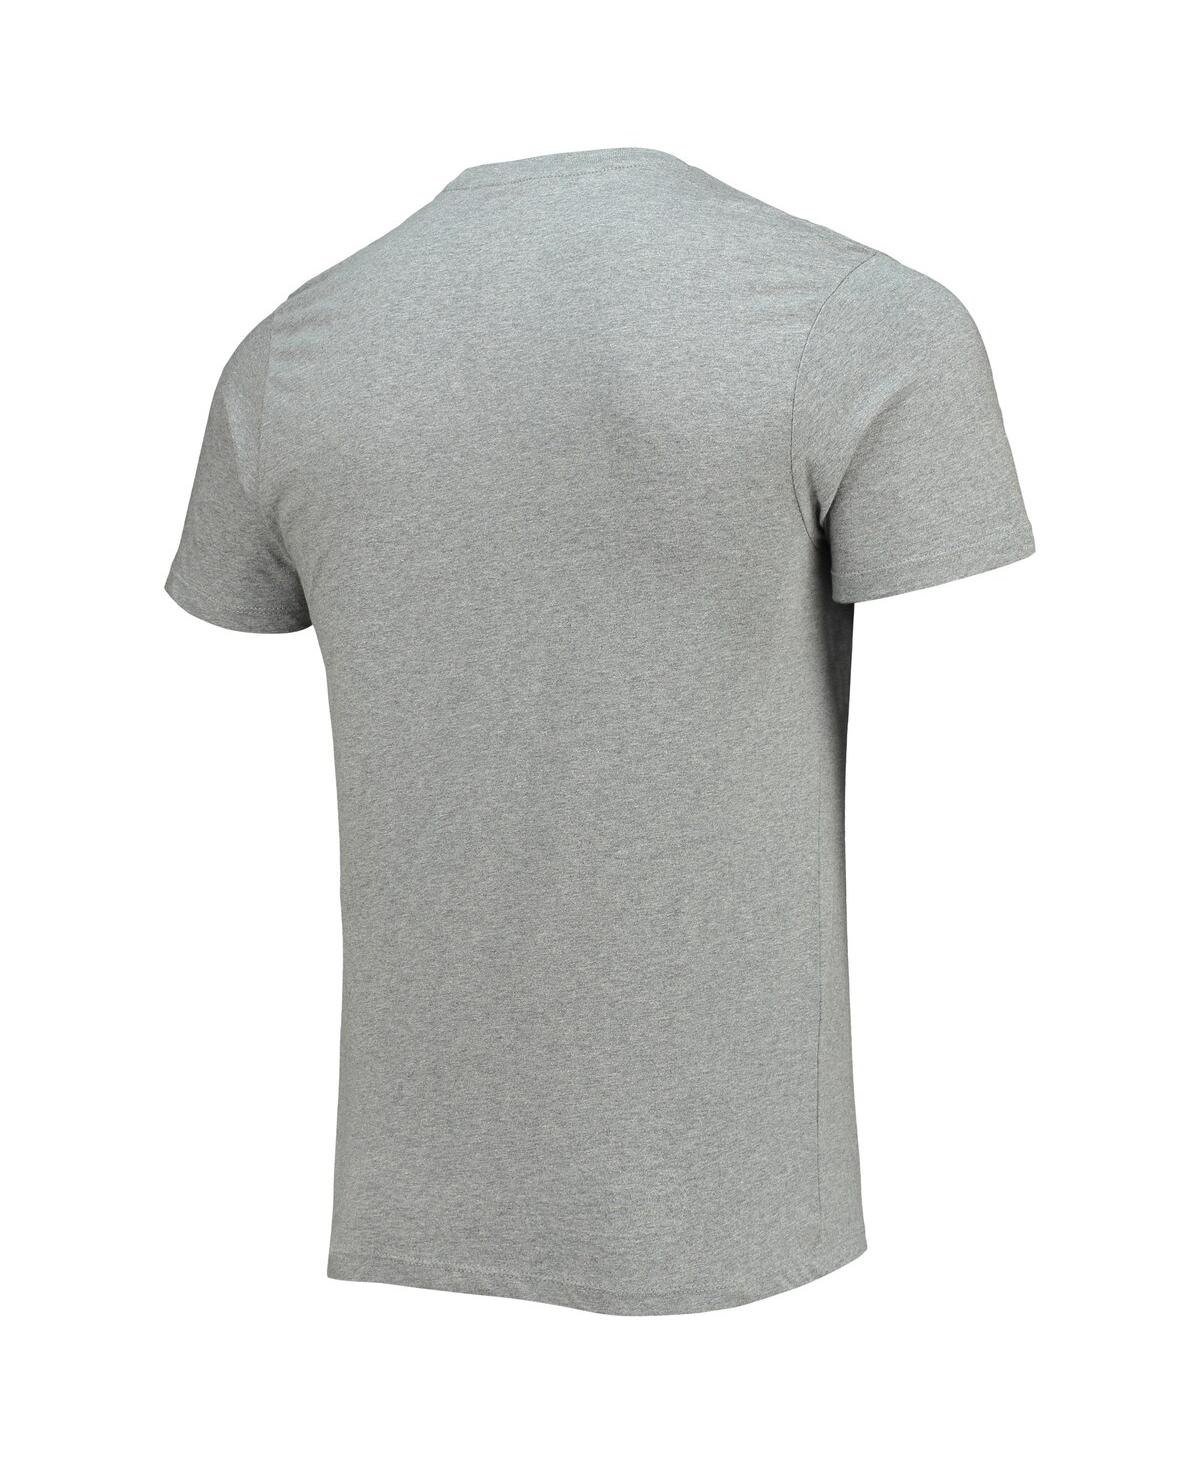 Shop 47 Brand Men's ' Gray Washington Commanders Imprint Super Rival T-shirt